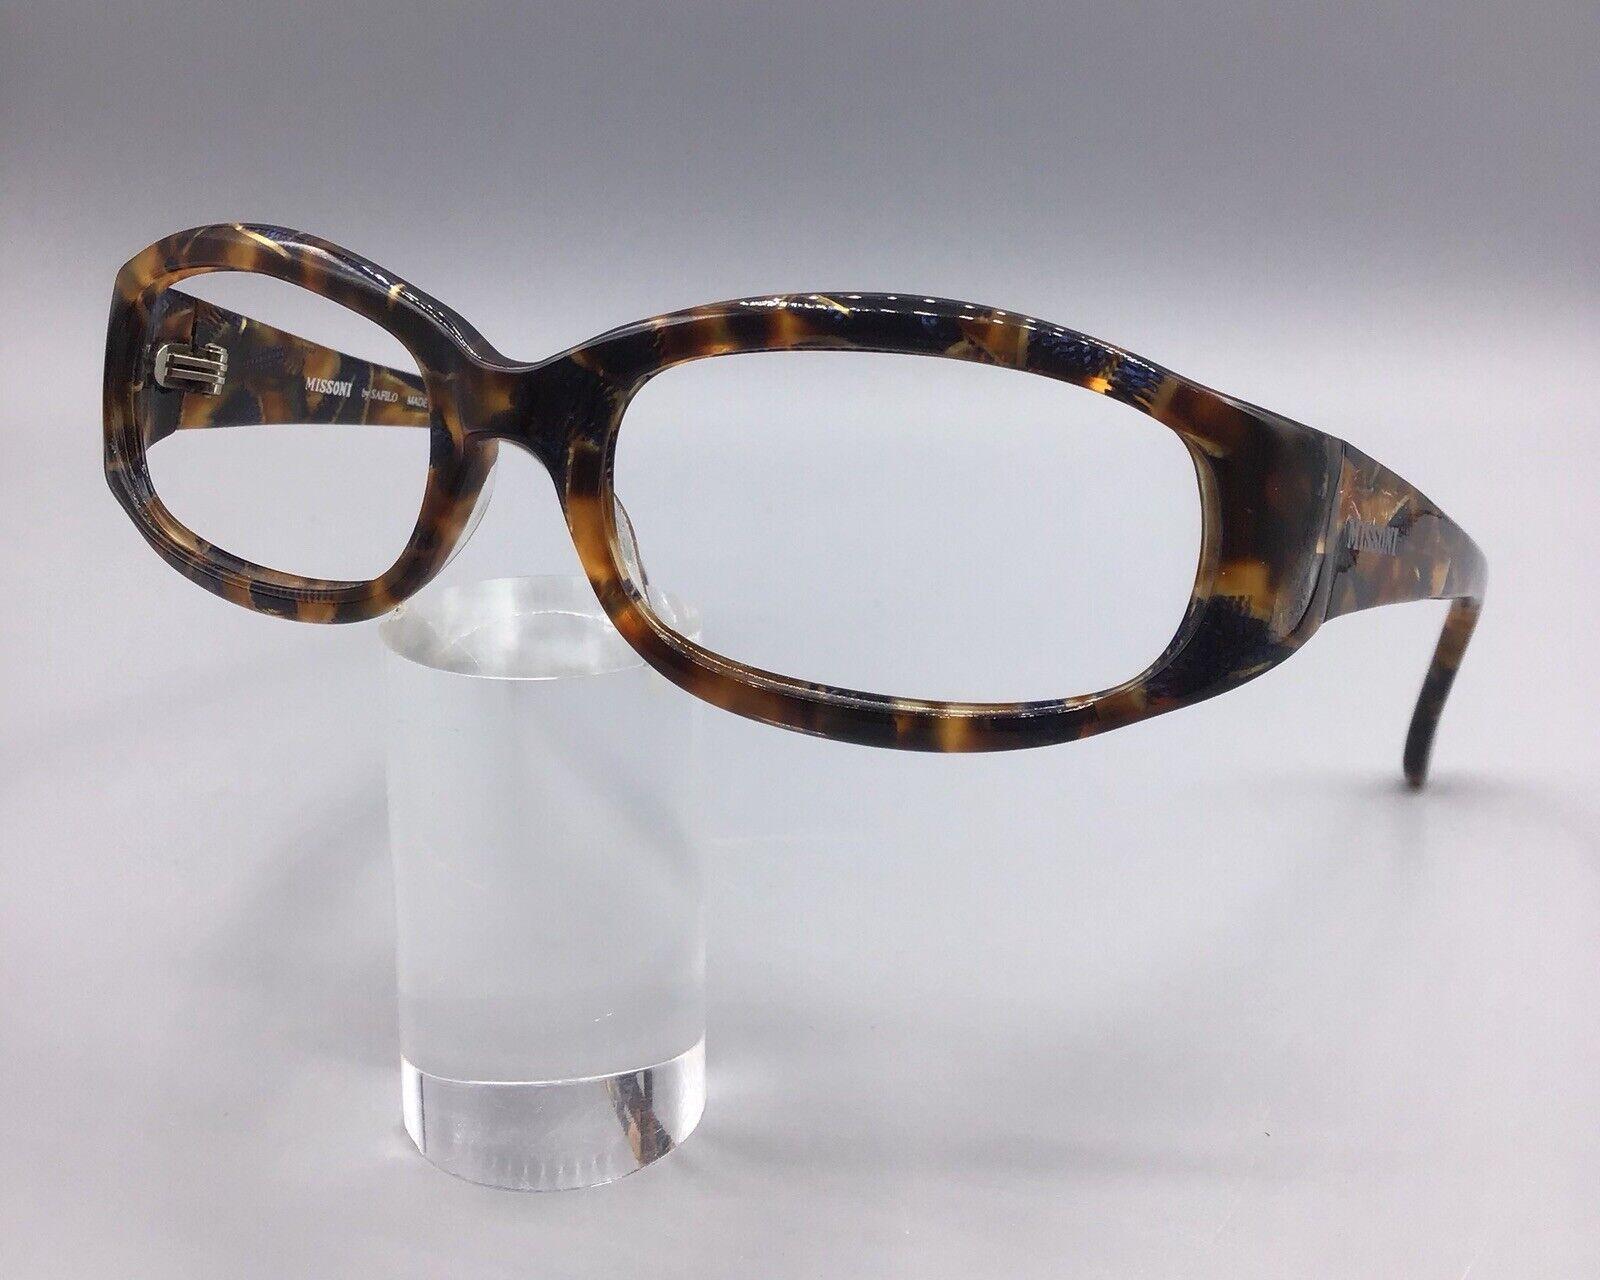 Missoni Occhiale Eyewear Vintage Made in Italy Eyeglasses Brillen Lunettes